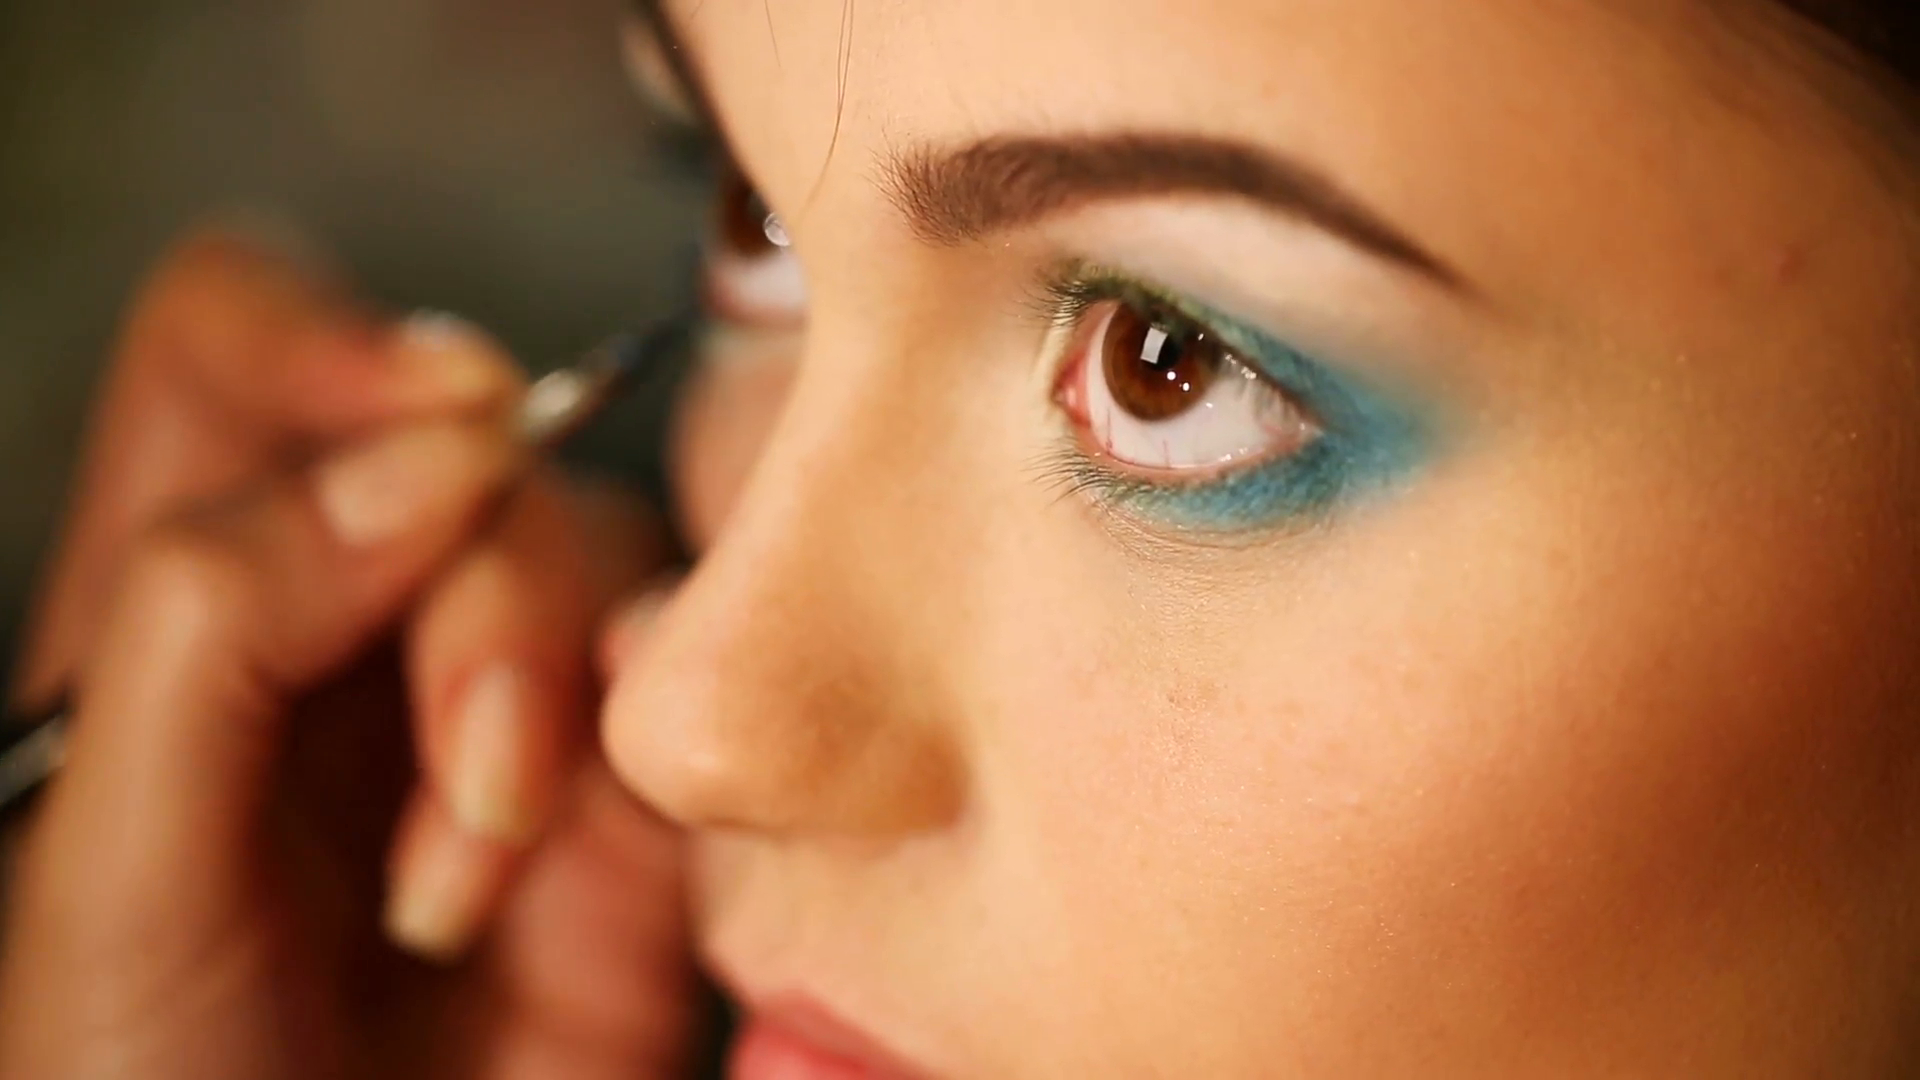 Bright Eye Makeup Makeup Artist Makes A Bright Eye Makeup Stage Make Up Stock Video